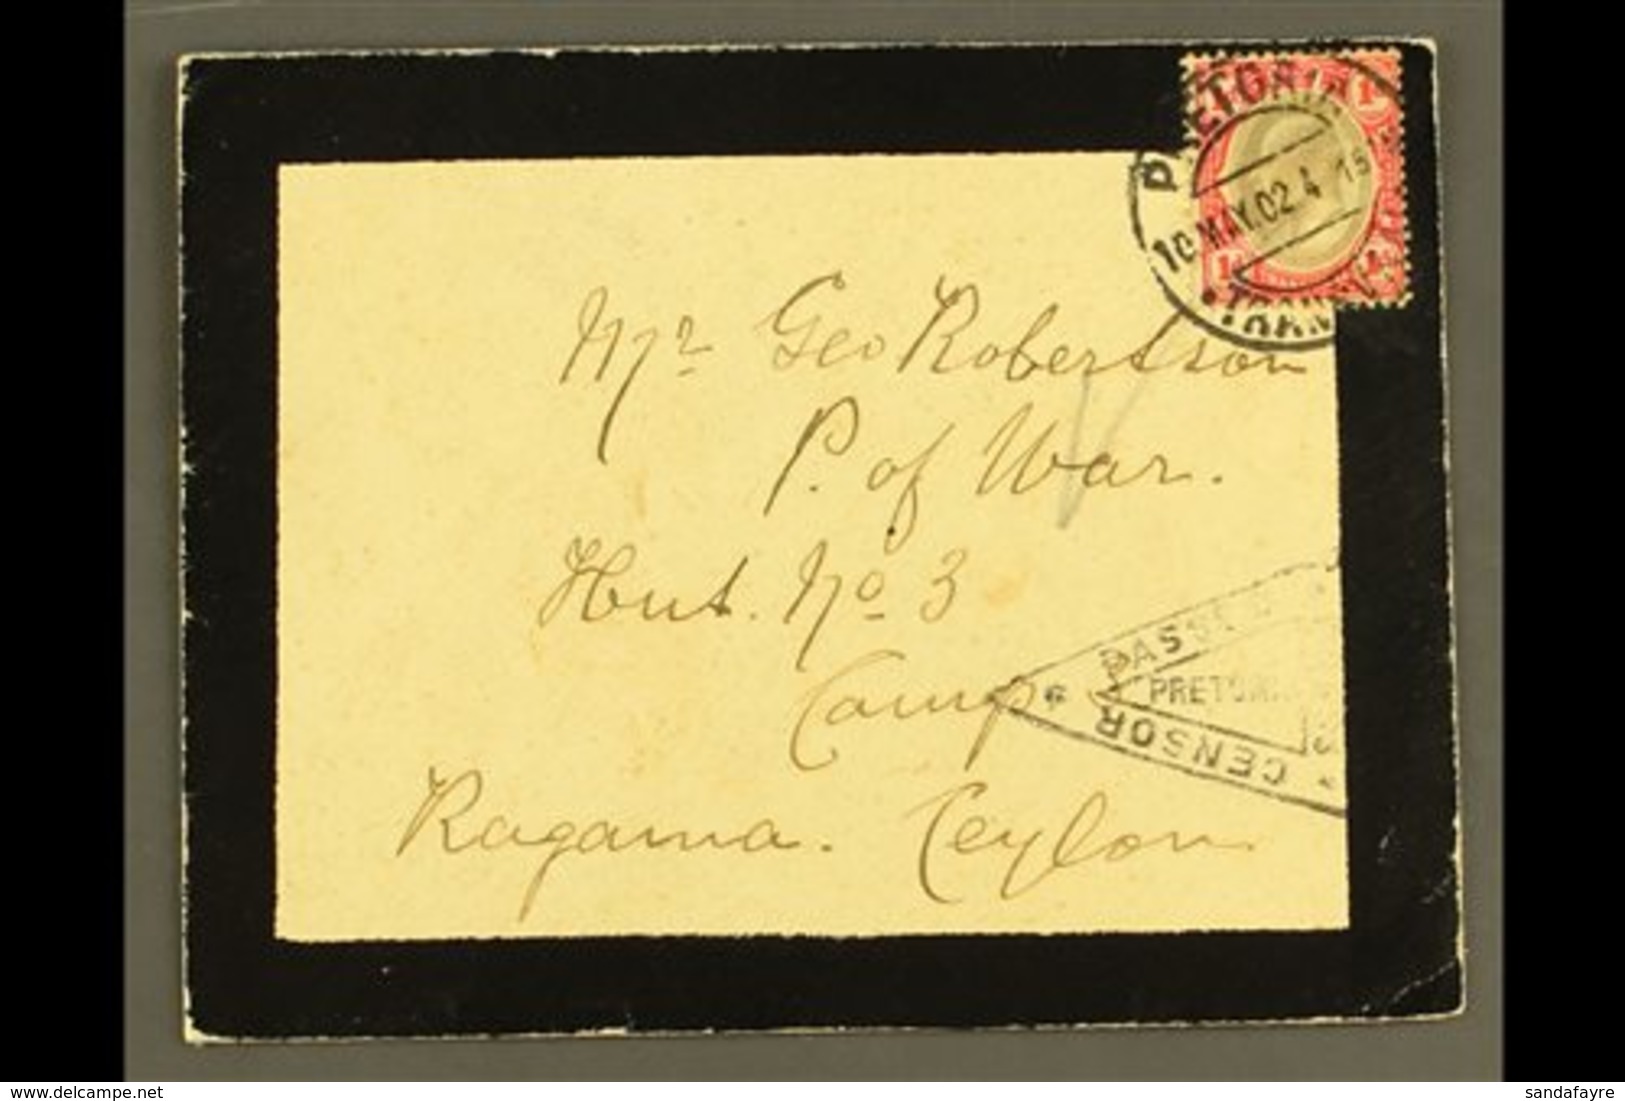 BOER WAR 1902 (10 May) Mourning Envelope Addressed To Prisoner Of War At Ragama Camp, Ceylon, Bearing Transvaal 1d KEVII - Unclassified